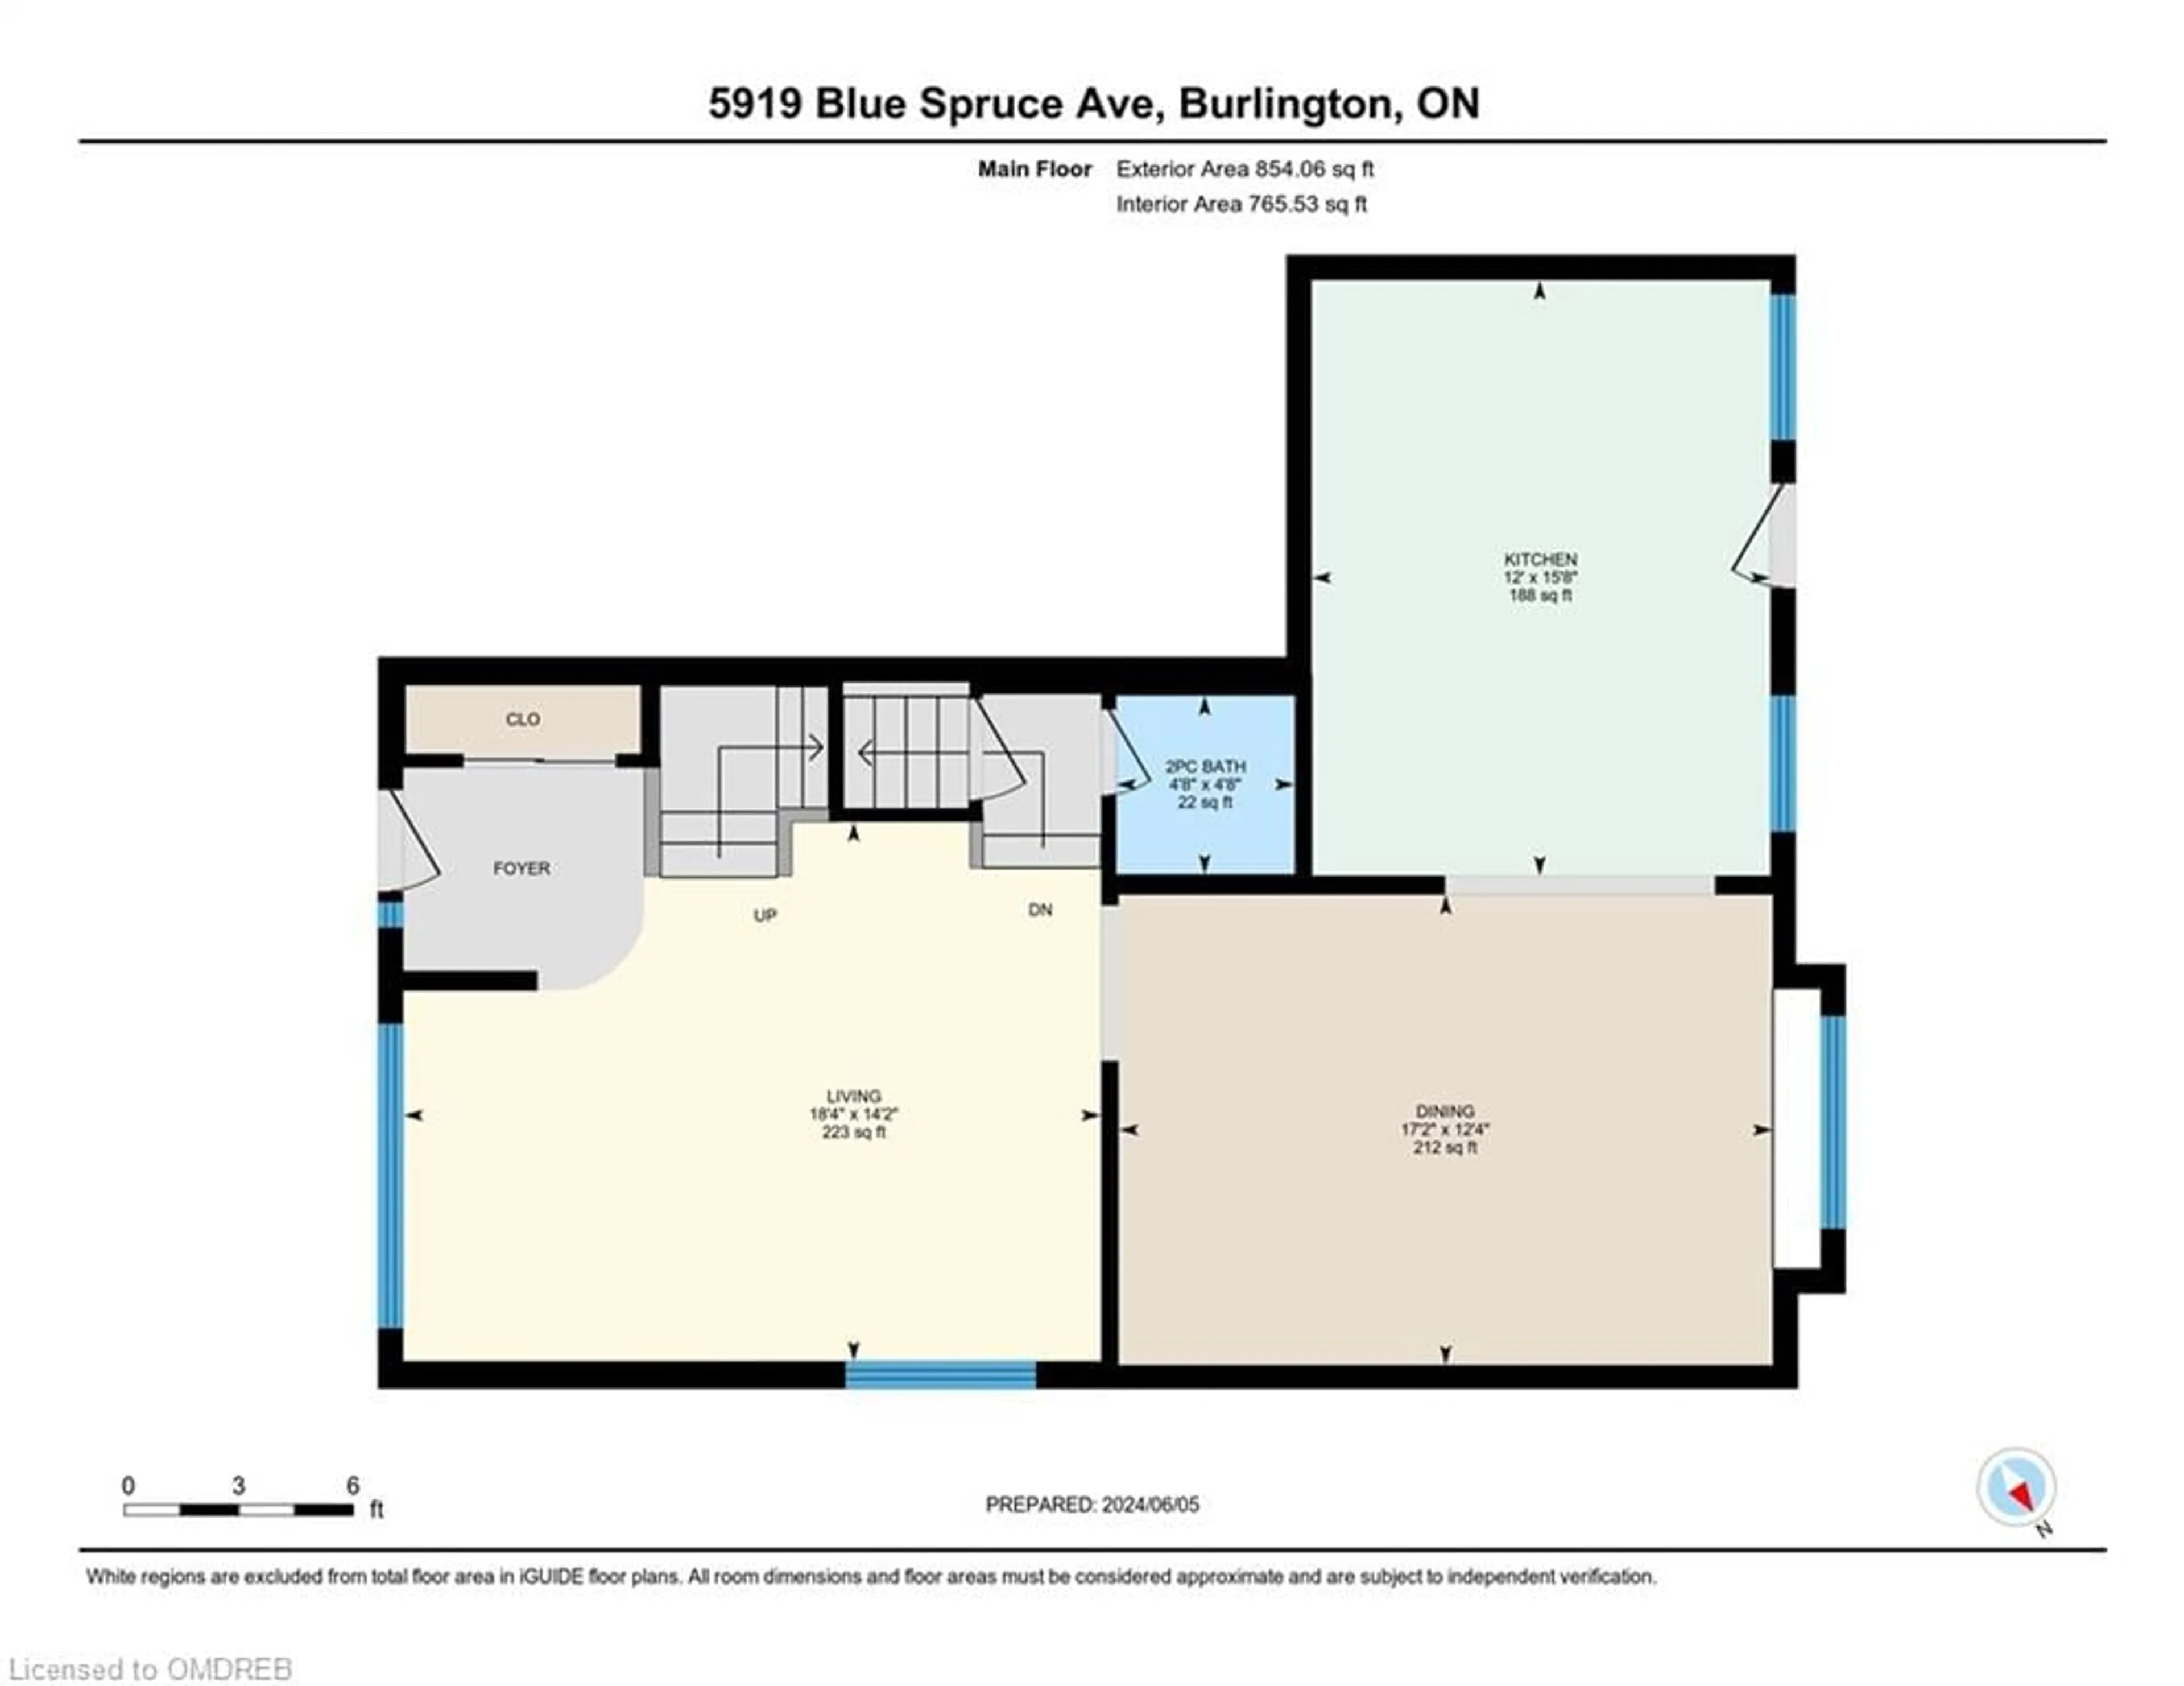 Floor plan for 5919 Blue Spruce Ave, Burlington Ontario L7L 6T3